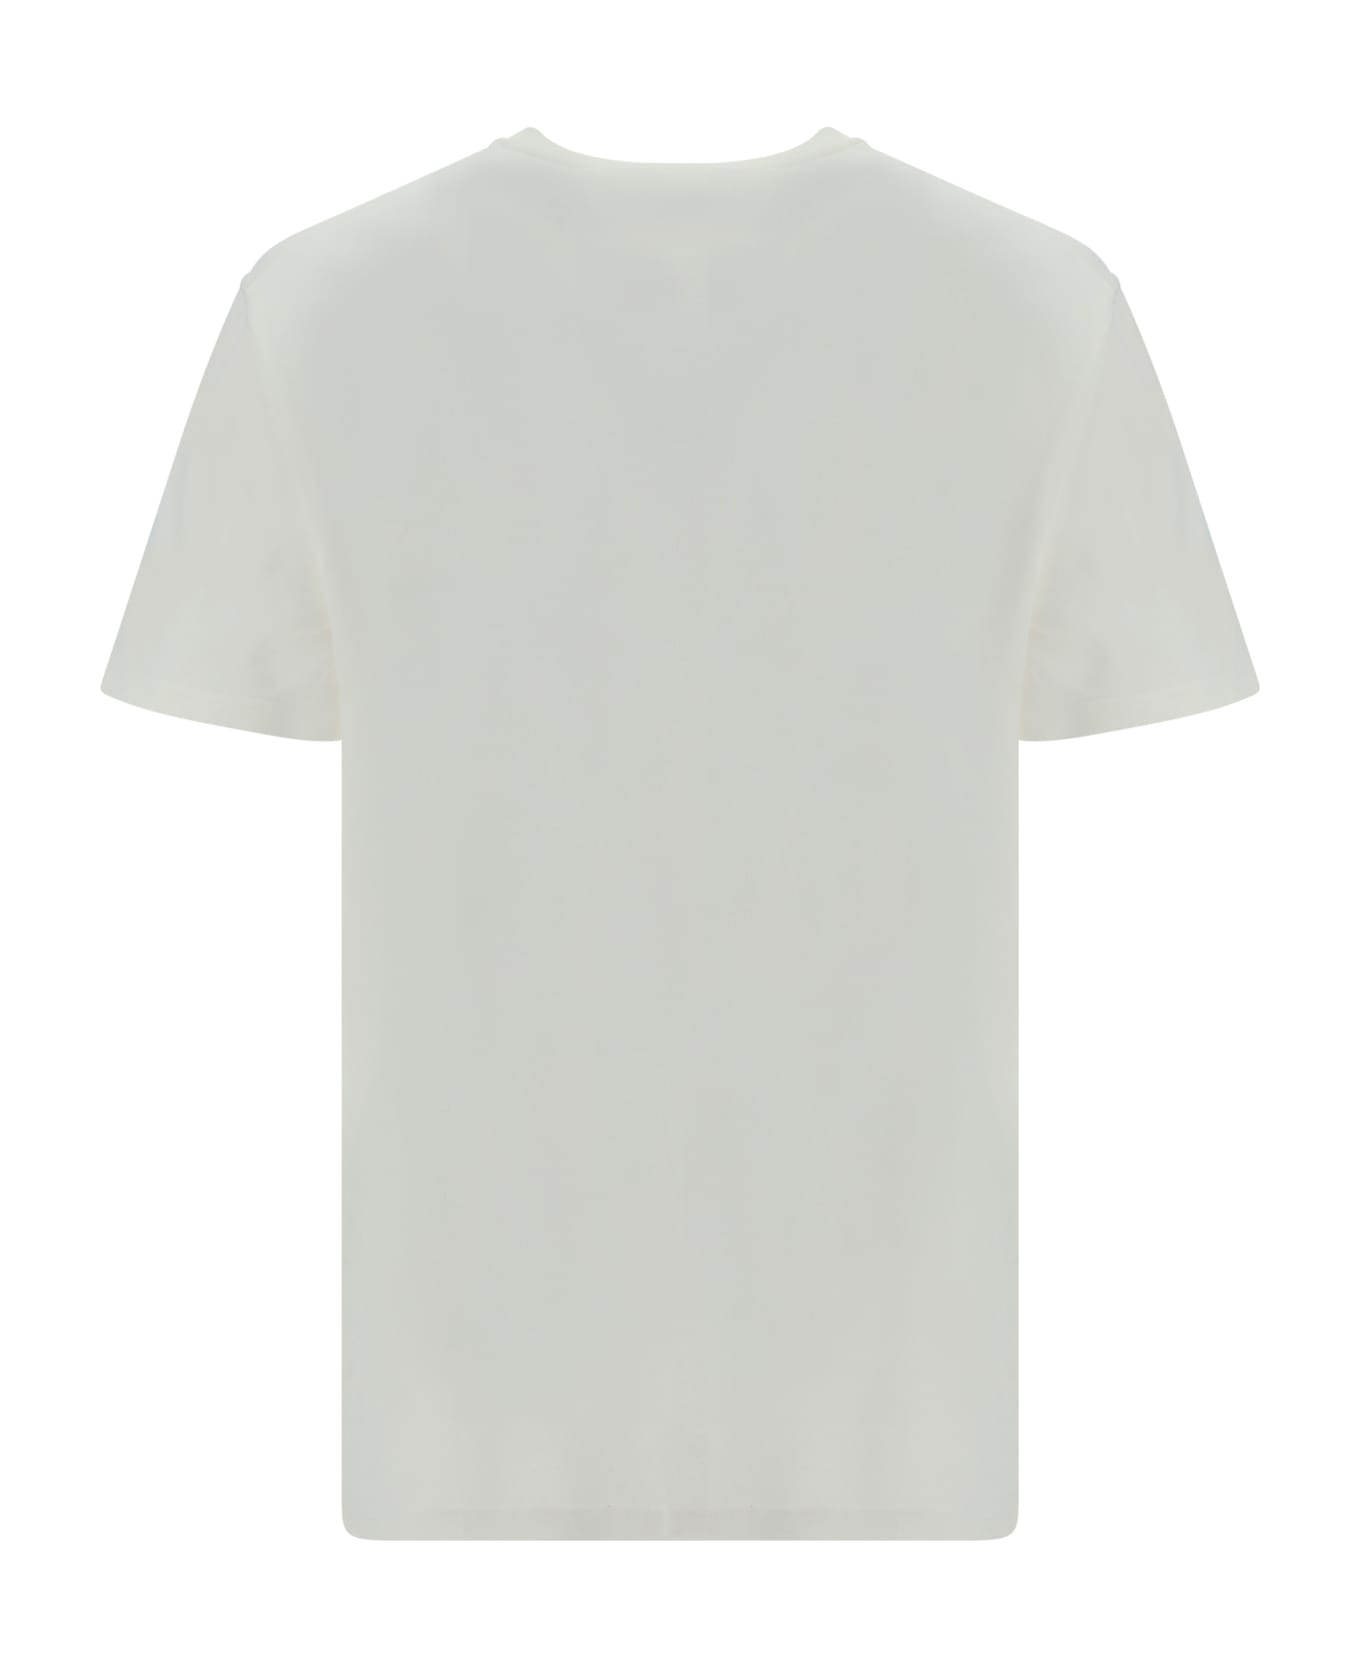 Jil Sander Ss T-shirt - 102